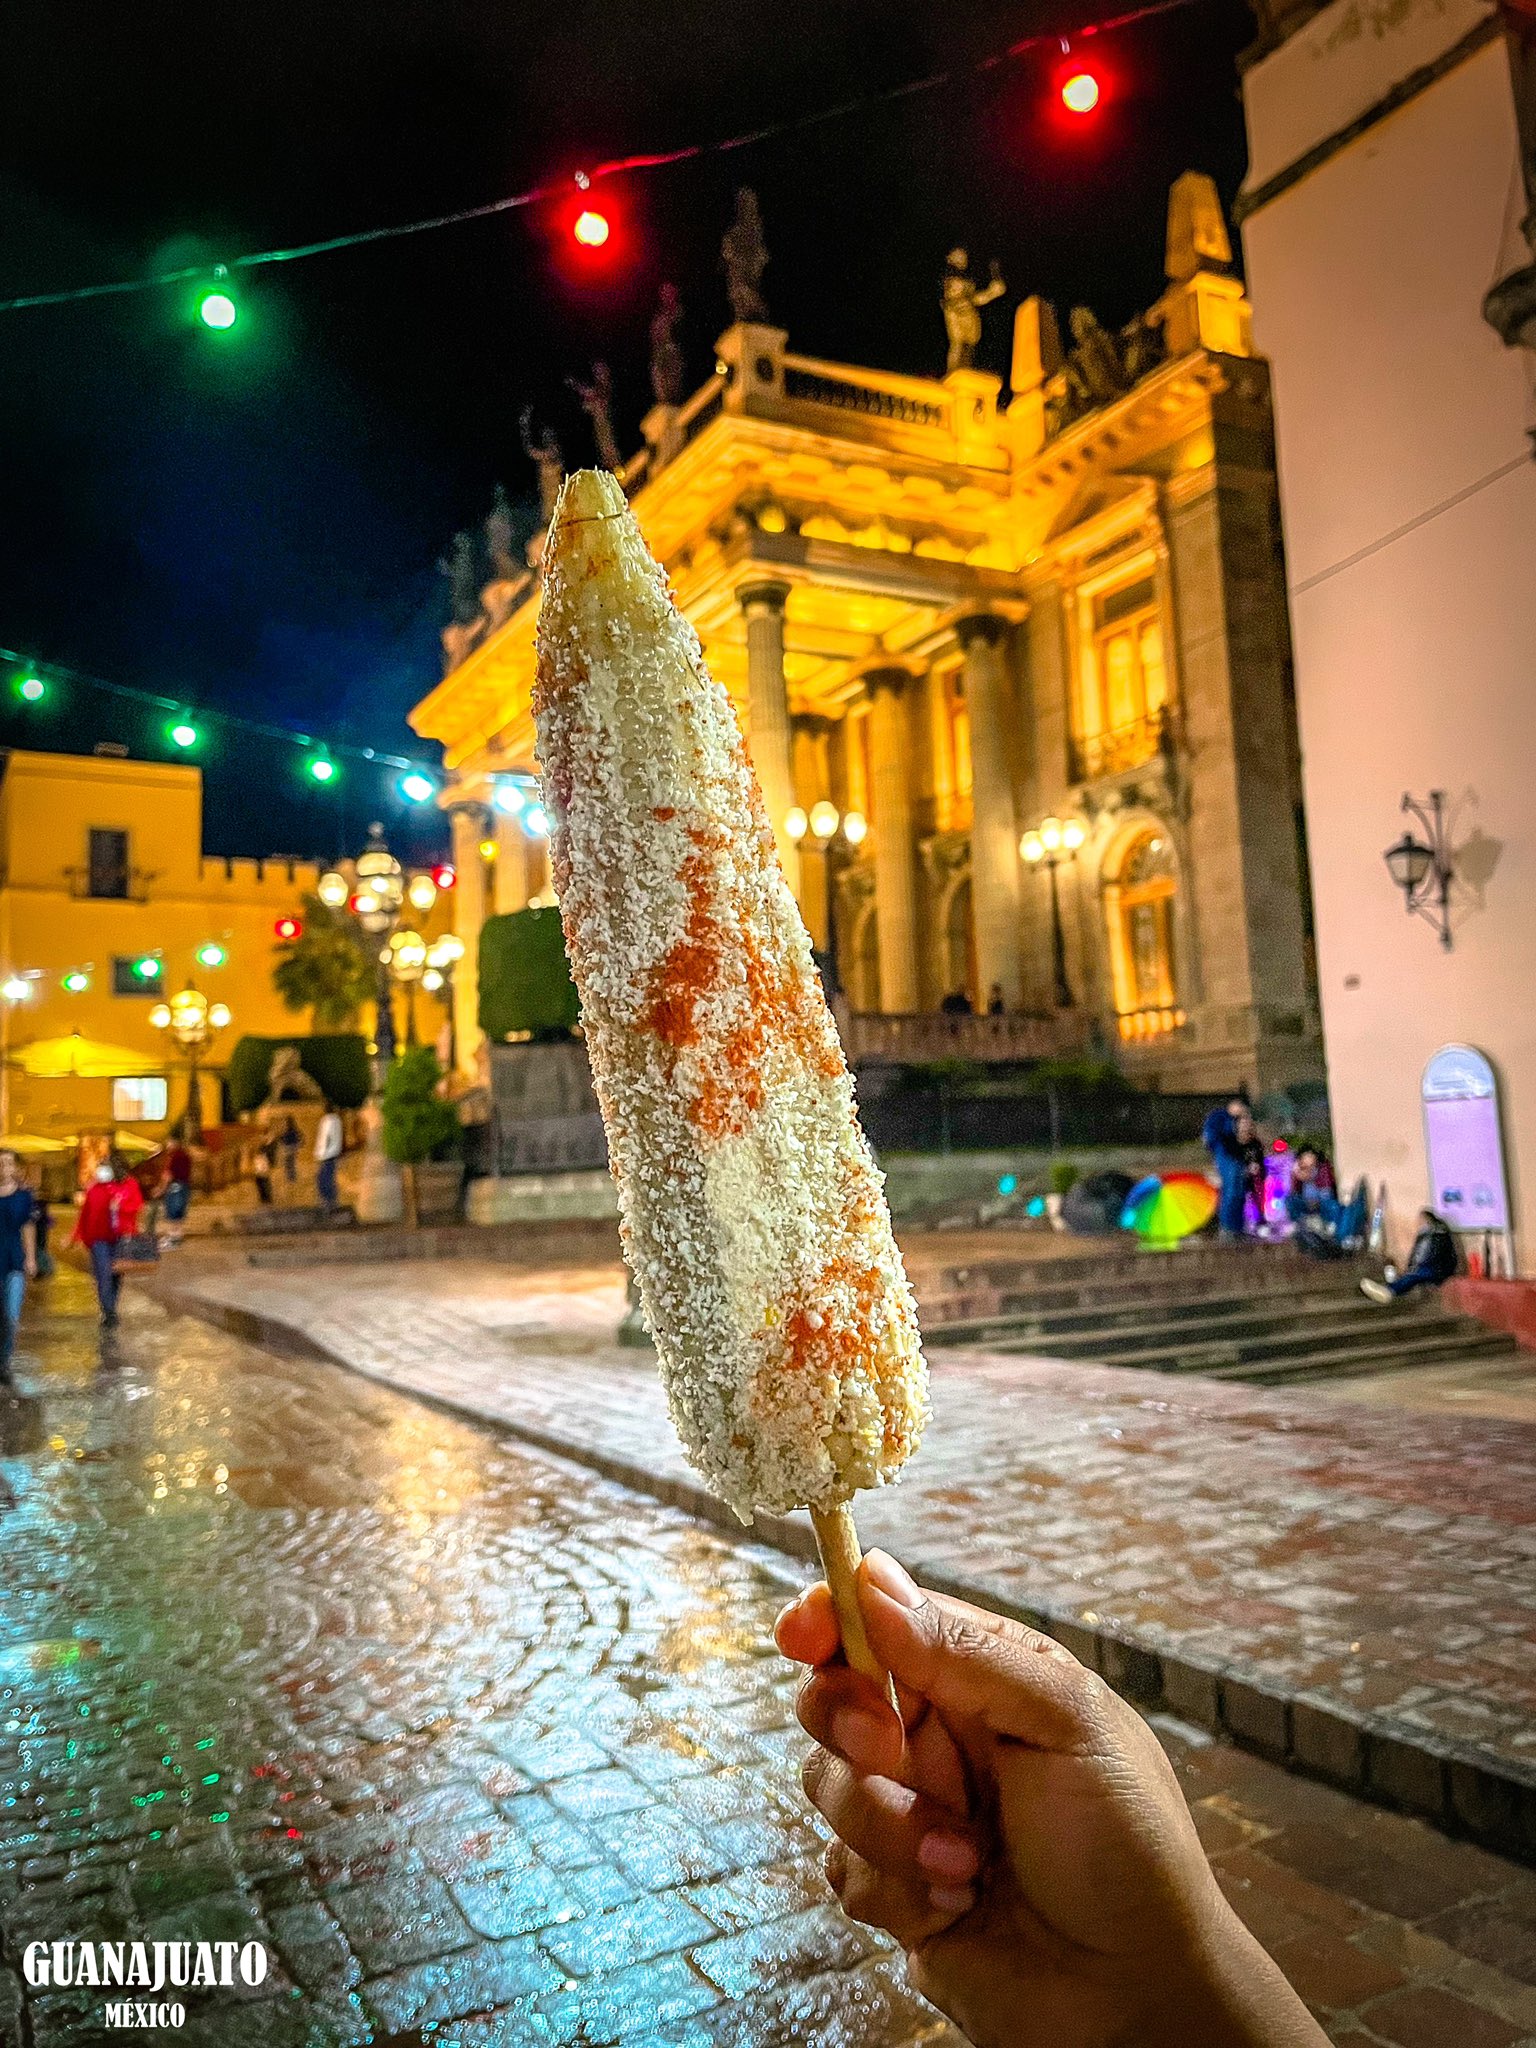 Guanajuato Cultural MX on Twitter: 